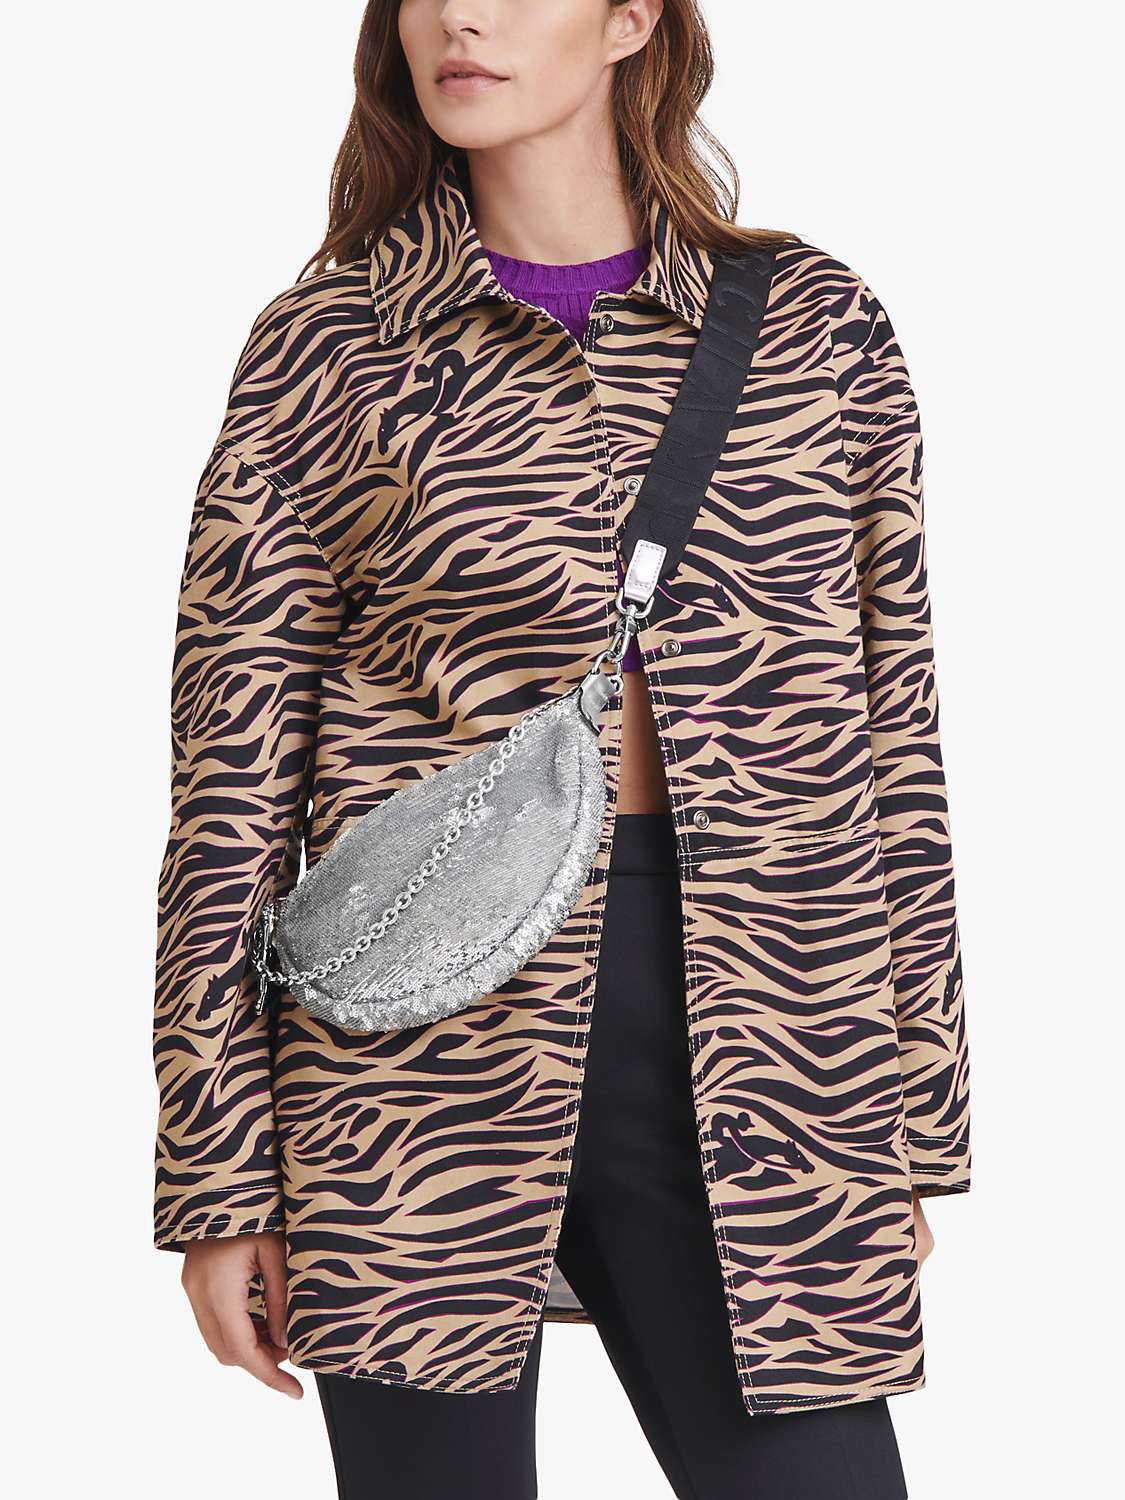 Buy Longchamp Smile Sequin Crossbody Bag, Silver Online at johnlewis.com